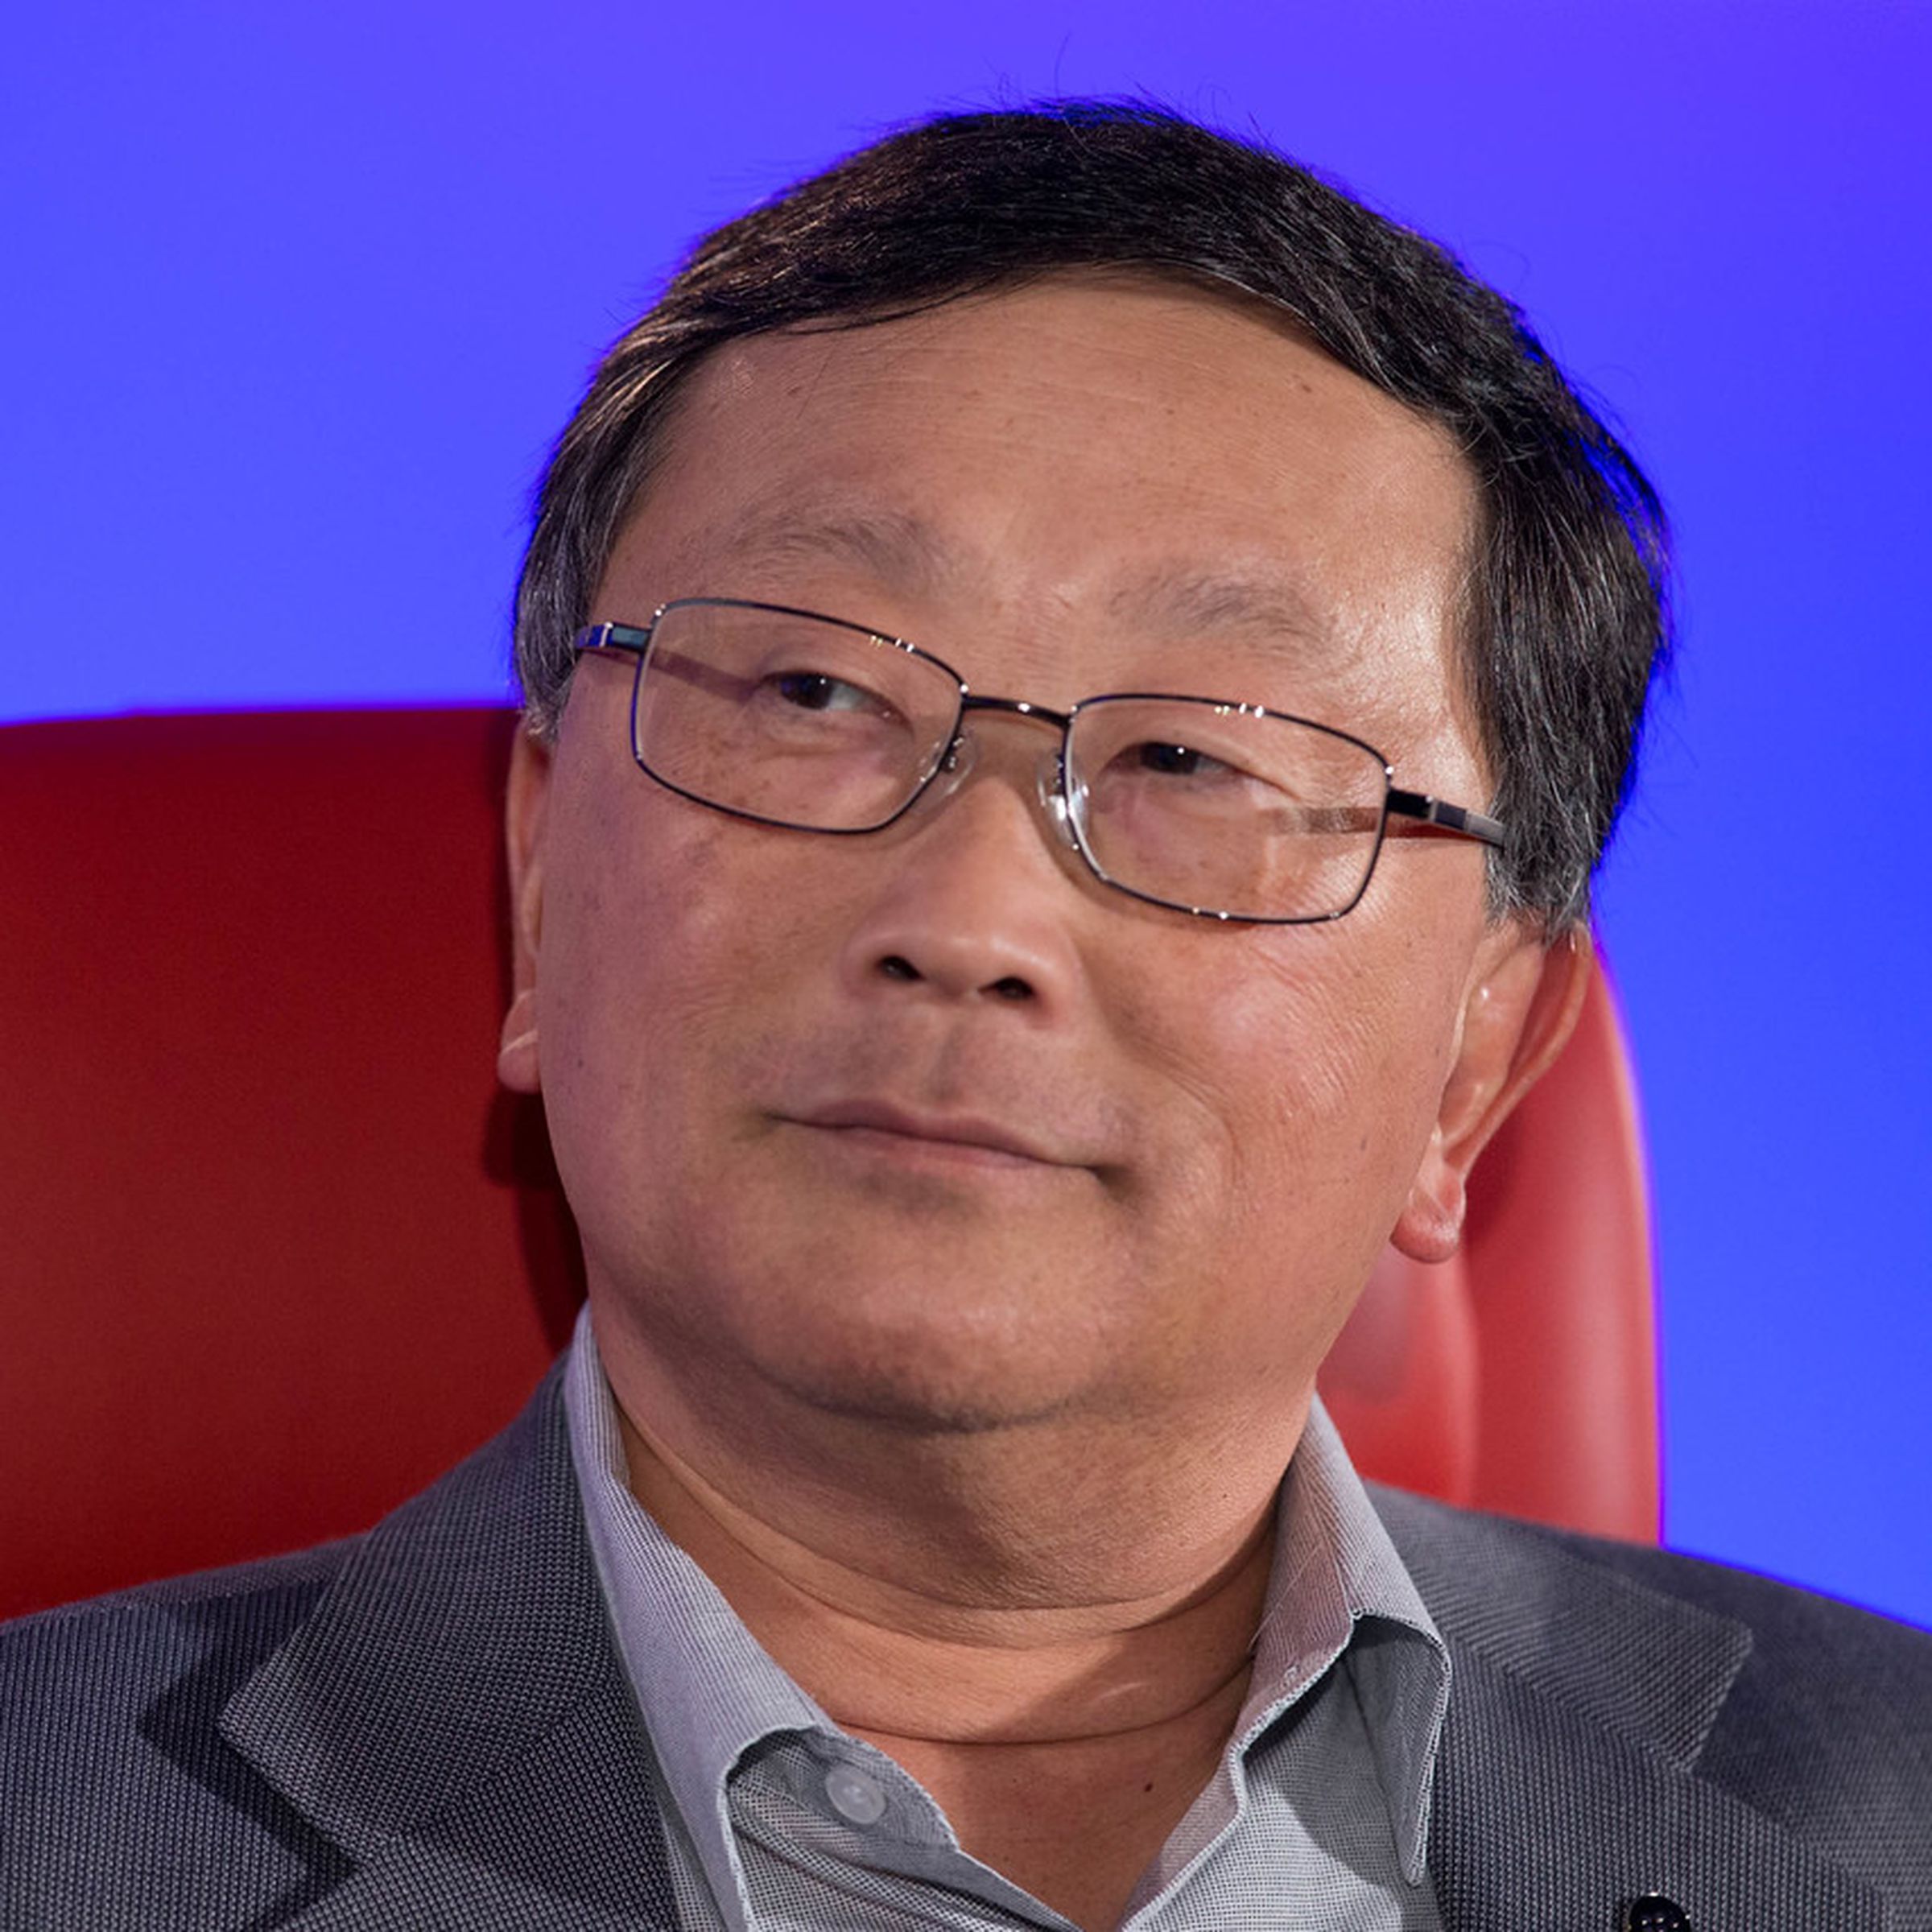 BlackBerry CEO John Chen at Code Mobile